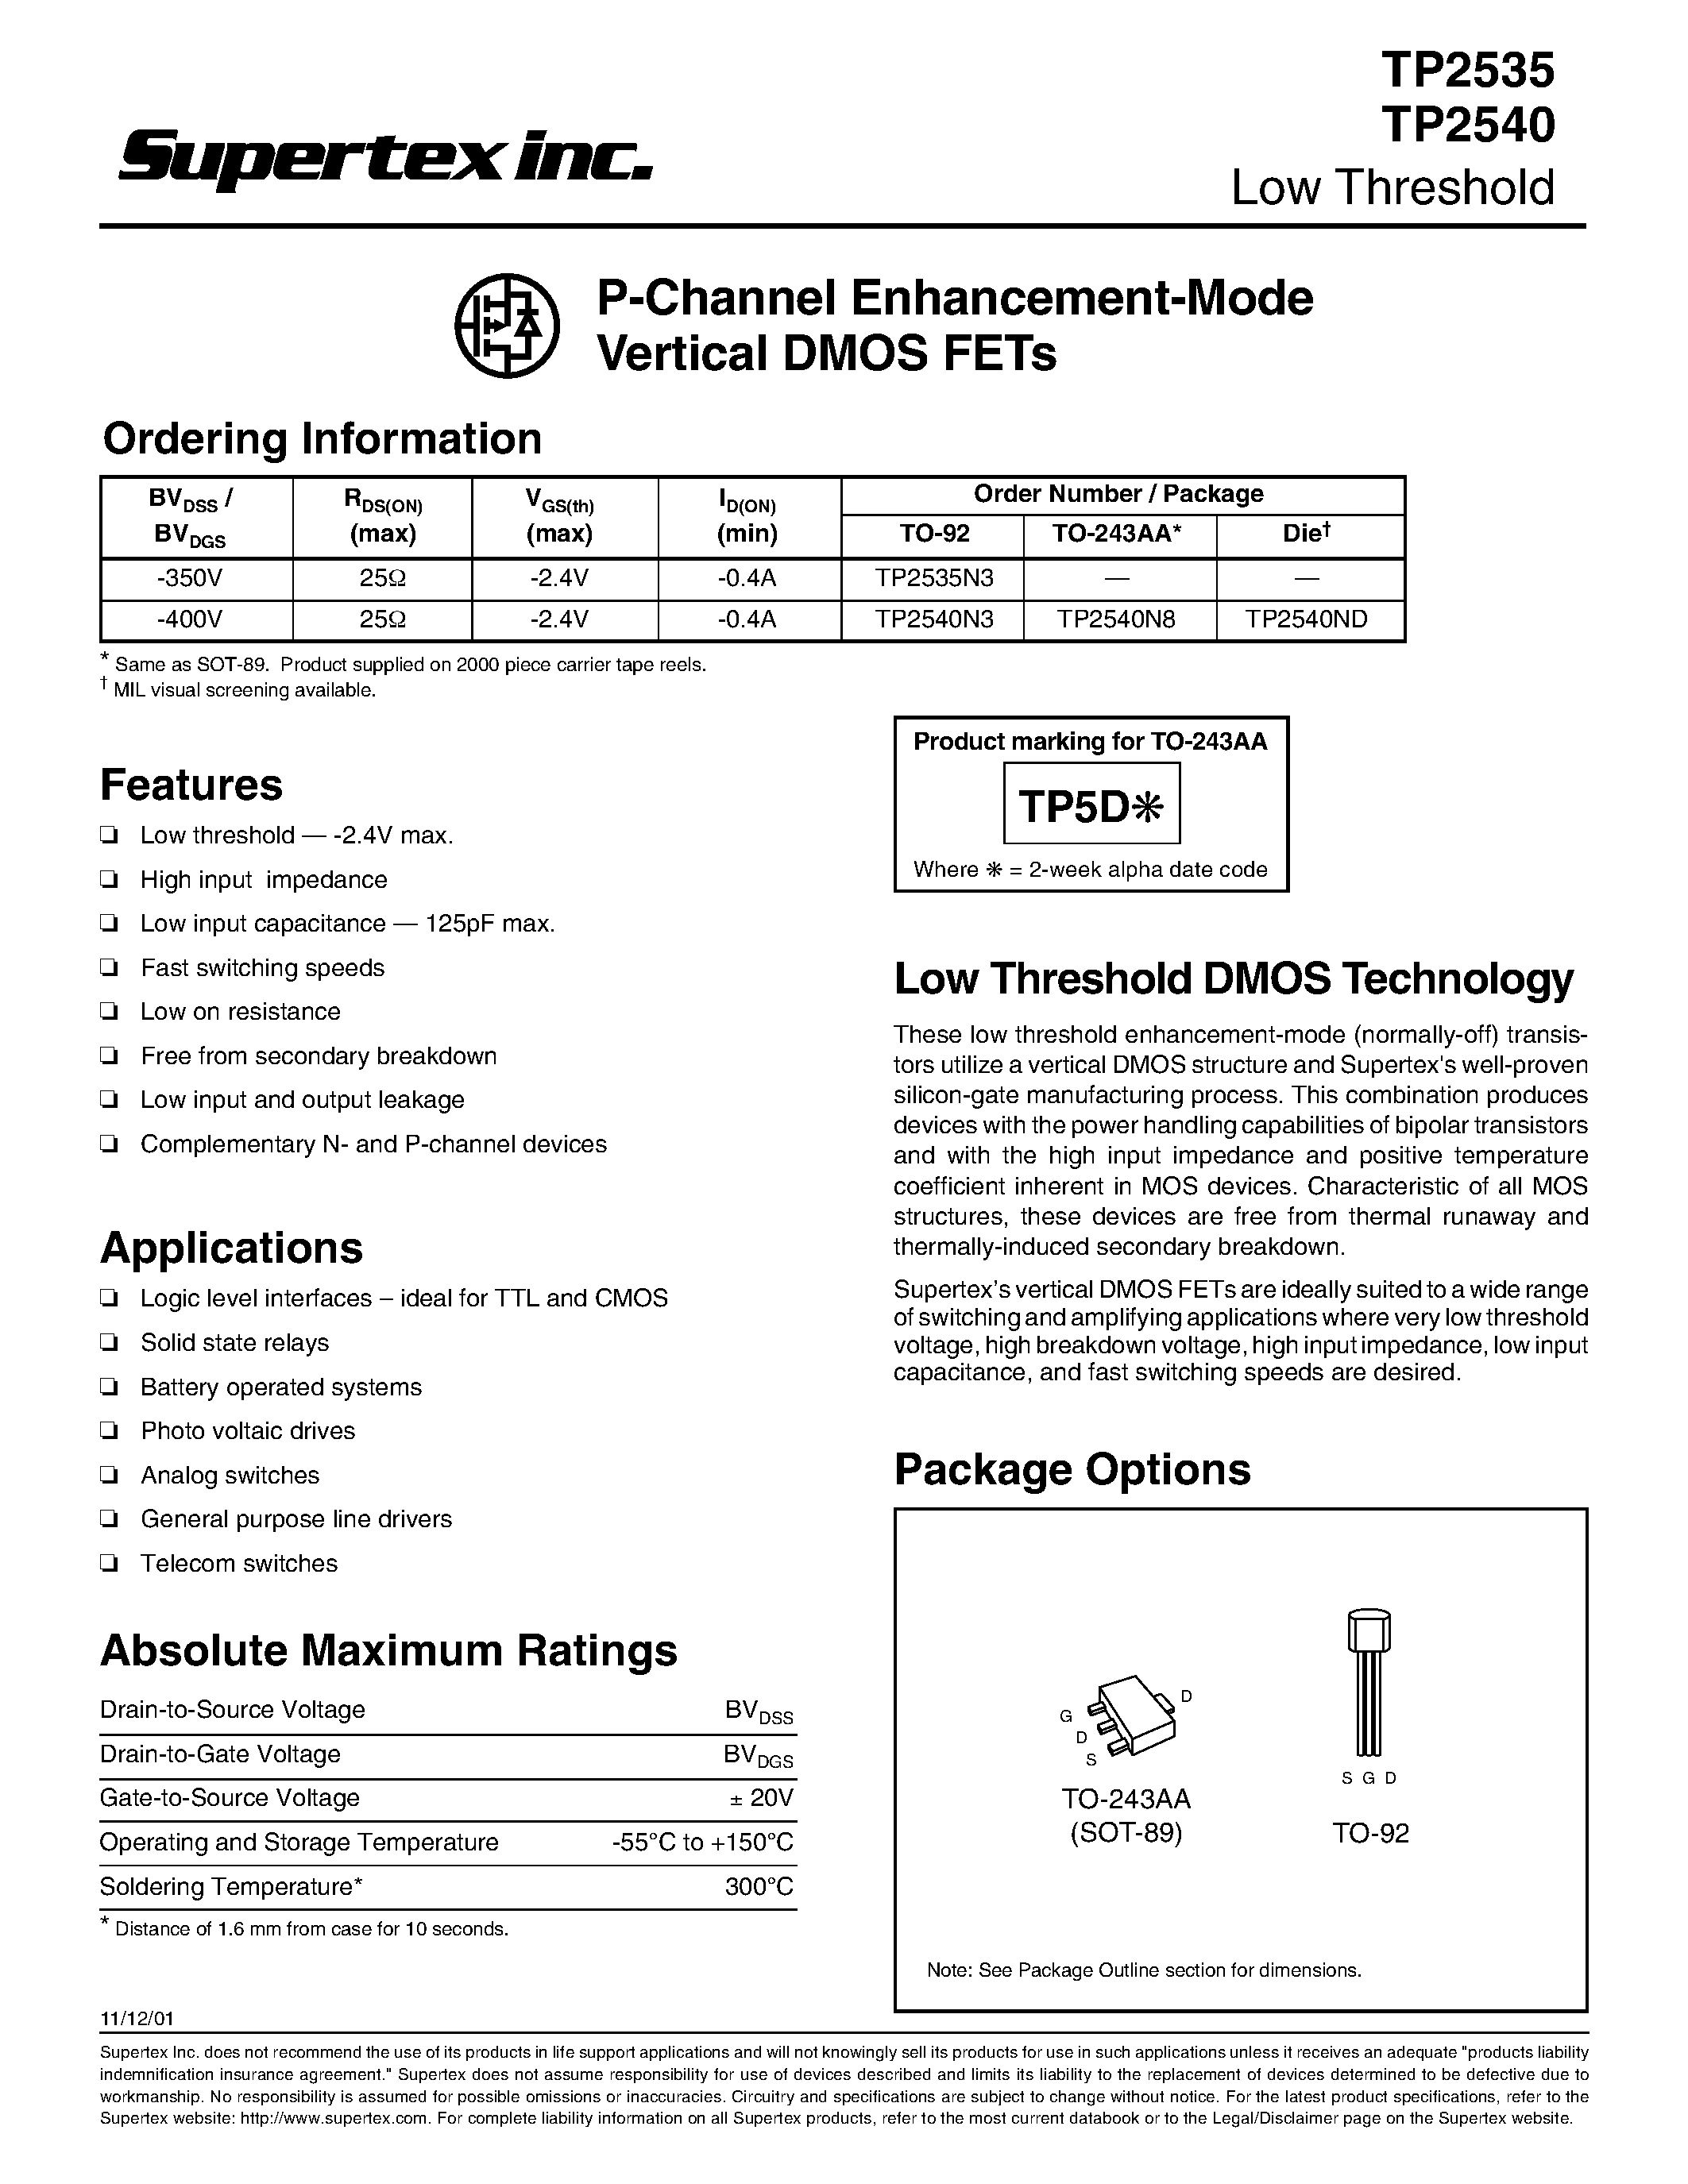 Datasheet TP2540N3 - P-Channel Enhancement-Mode Vertical DMOS FETs page 1